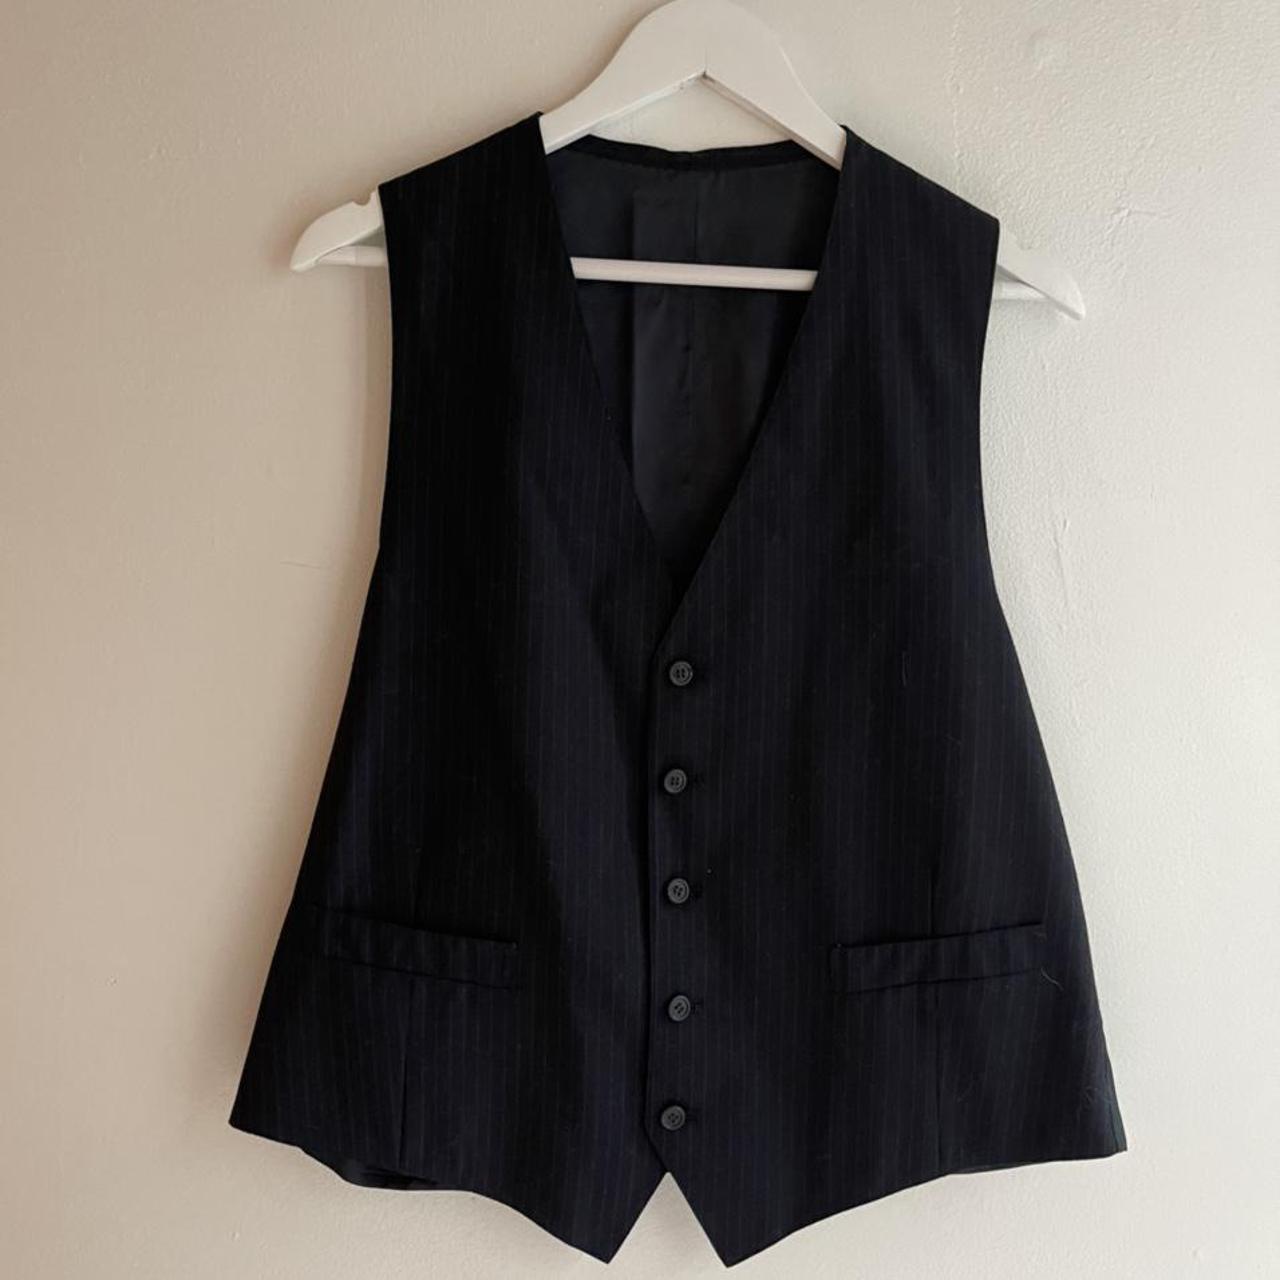 Product Image 1 - Black Striped Vest 

- no